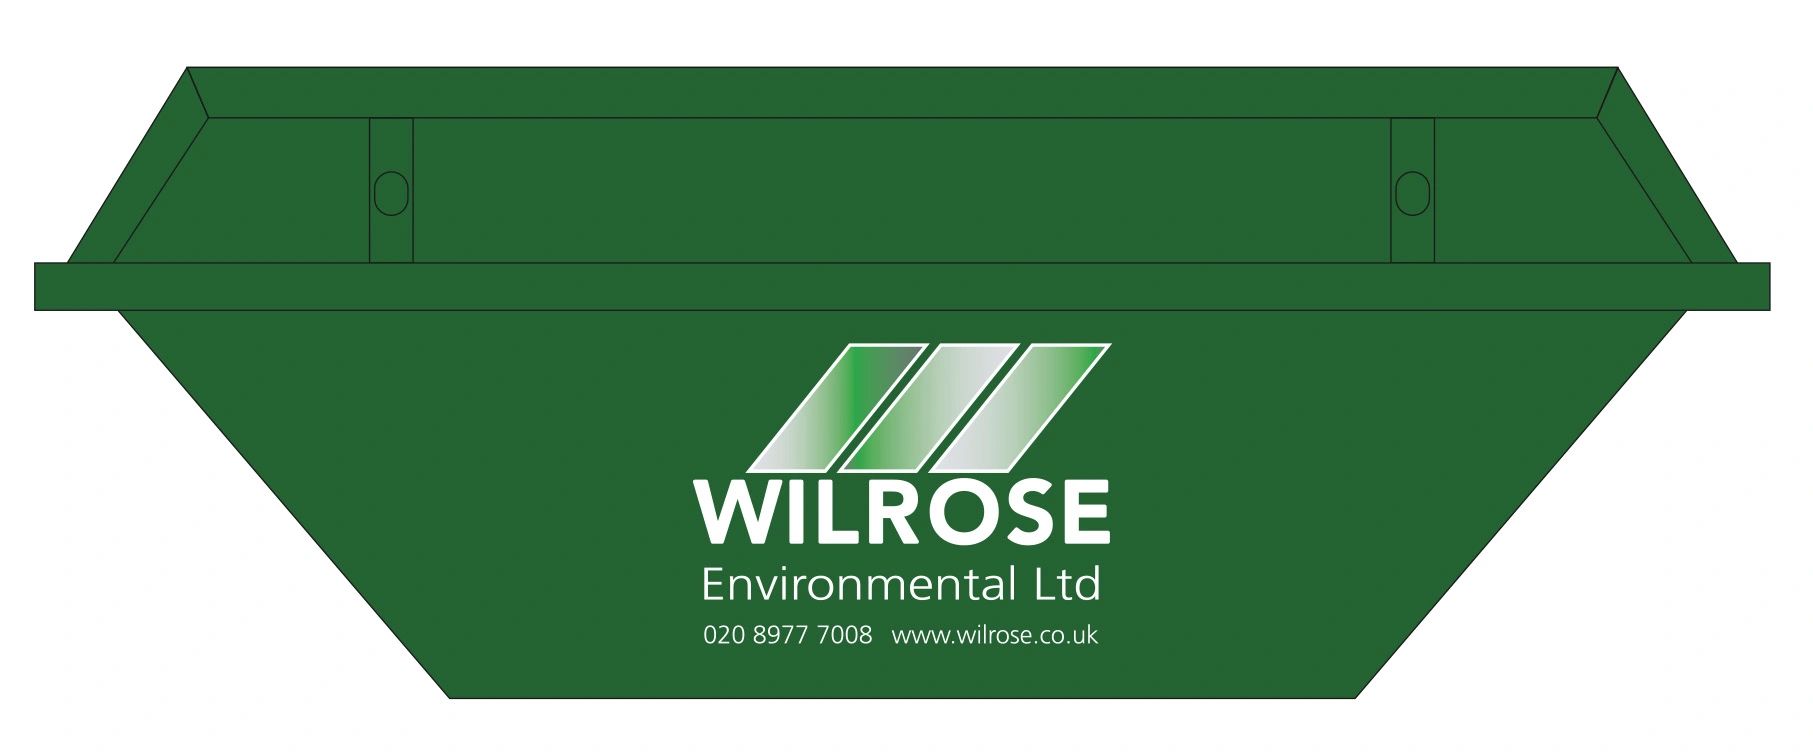 12 yard Wilrose Skip with wilrose logo.